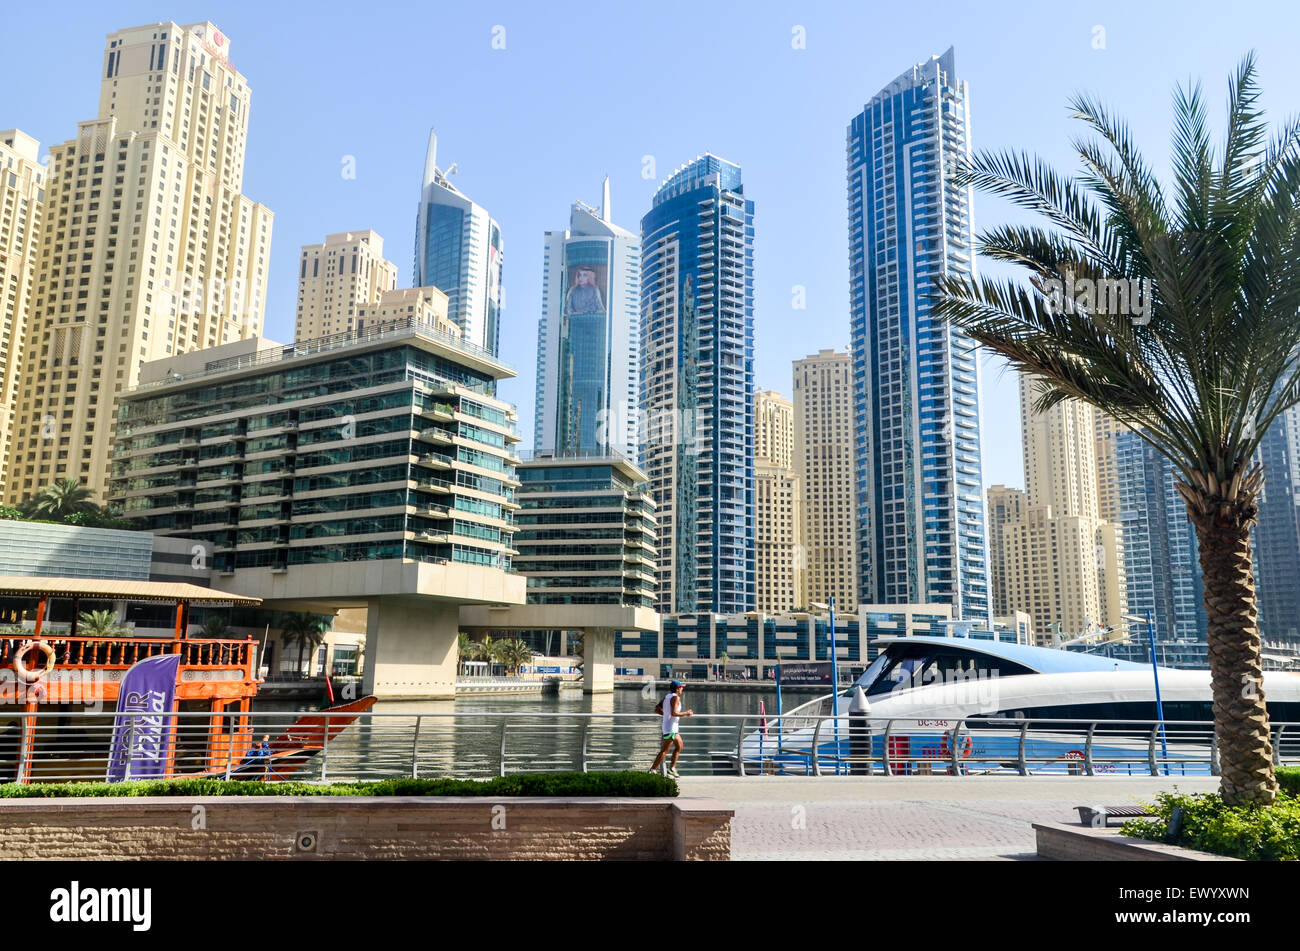 Runner jogging on the promenade near the futuristic skyline of the Dubai Marina, United Arab Emirates Stock Photo